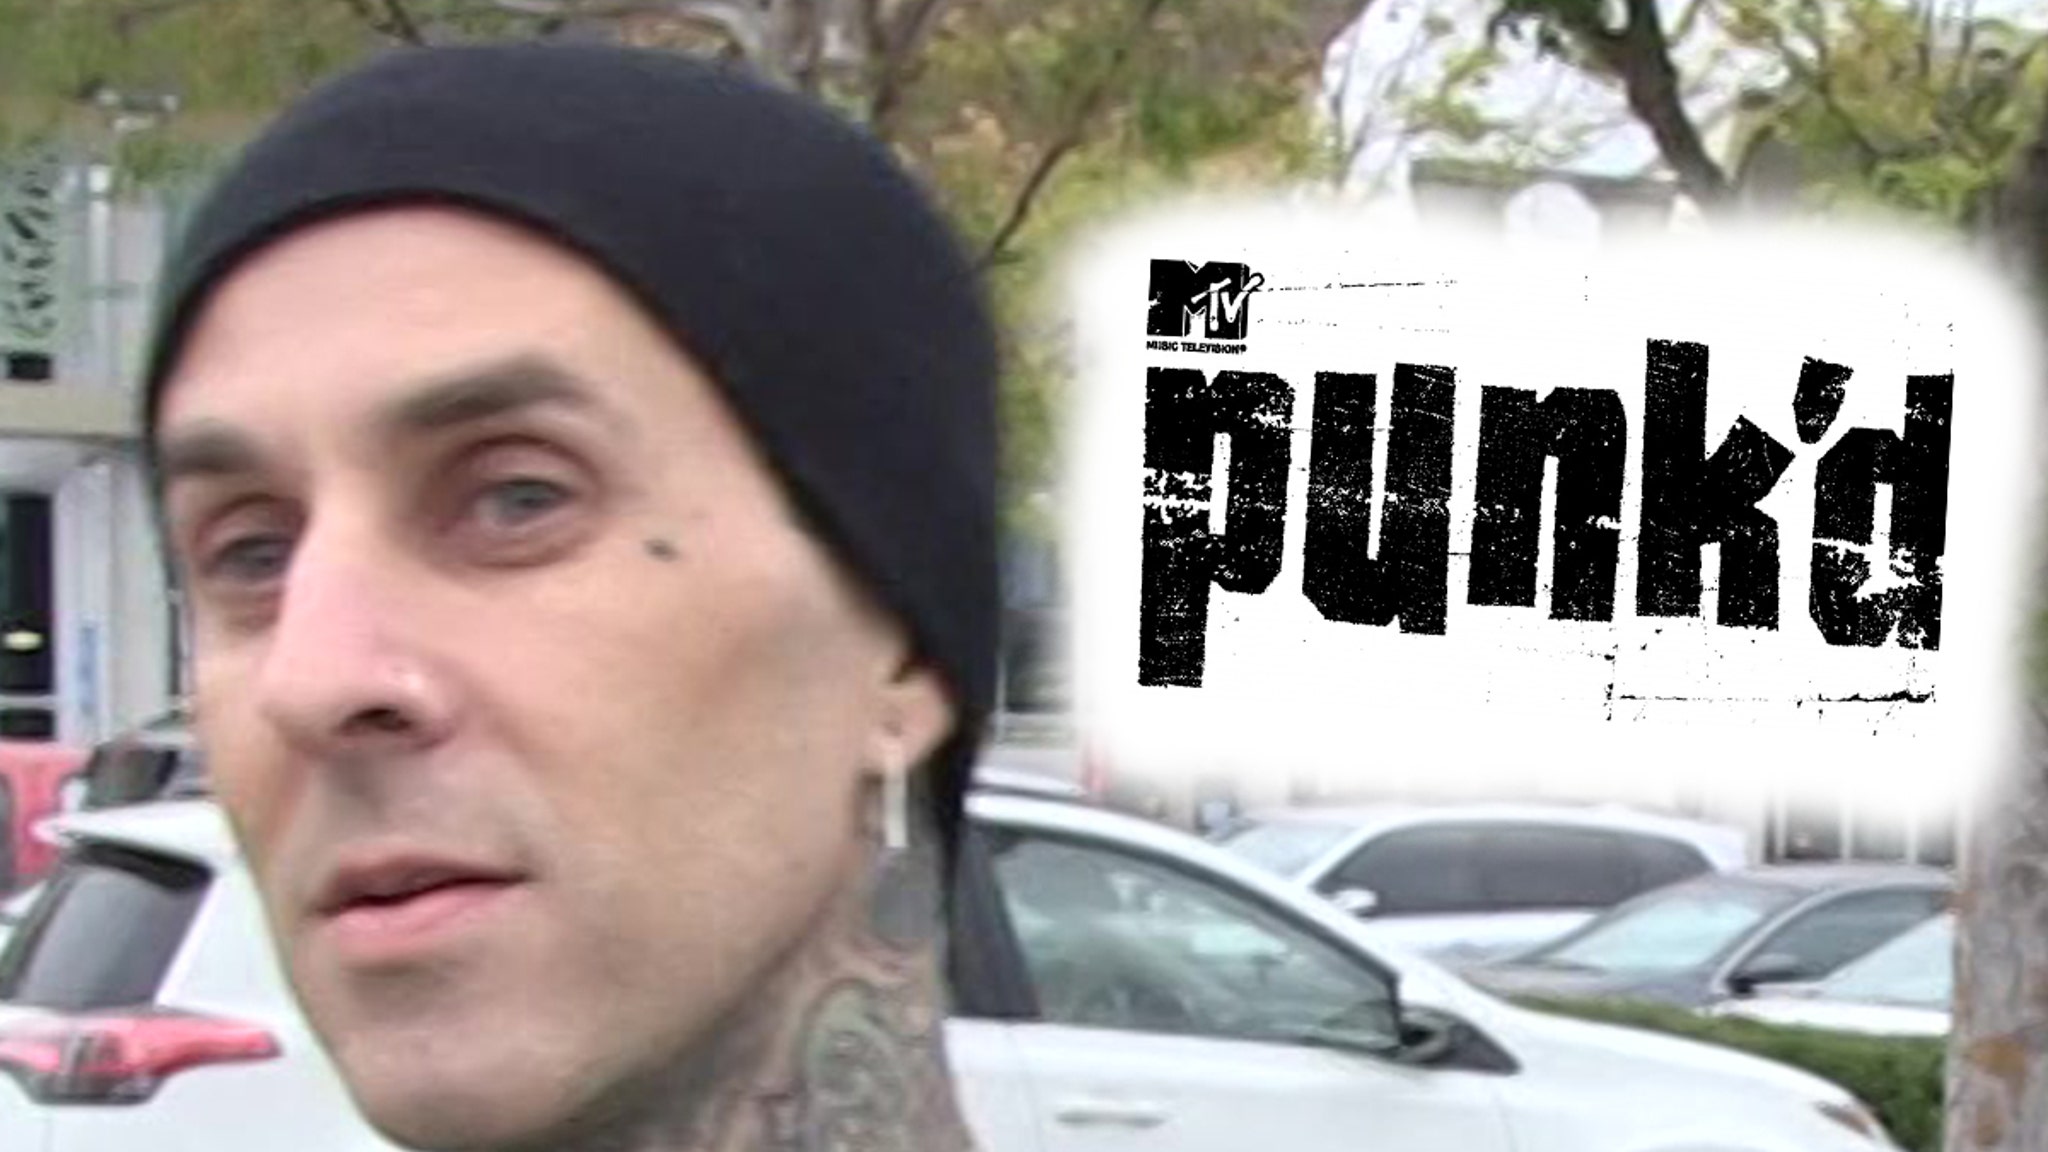 Travis Barker Didn't Hurl Homophobic Slur on 'Punk'd', Actor From Resurfaced Clip Says - TMZ